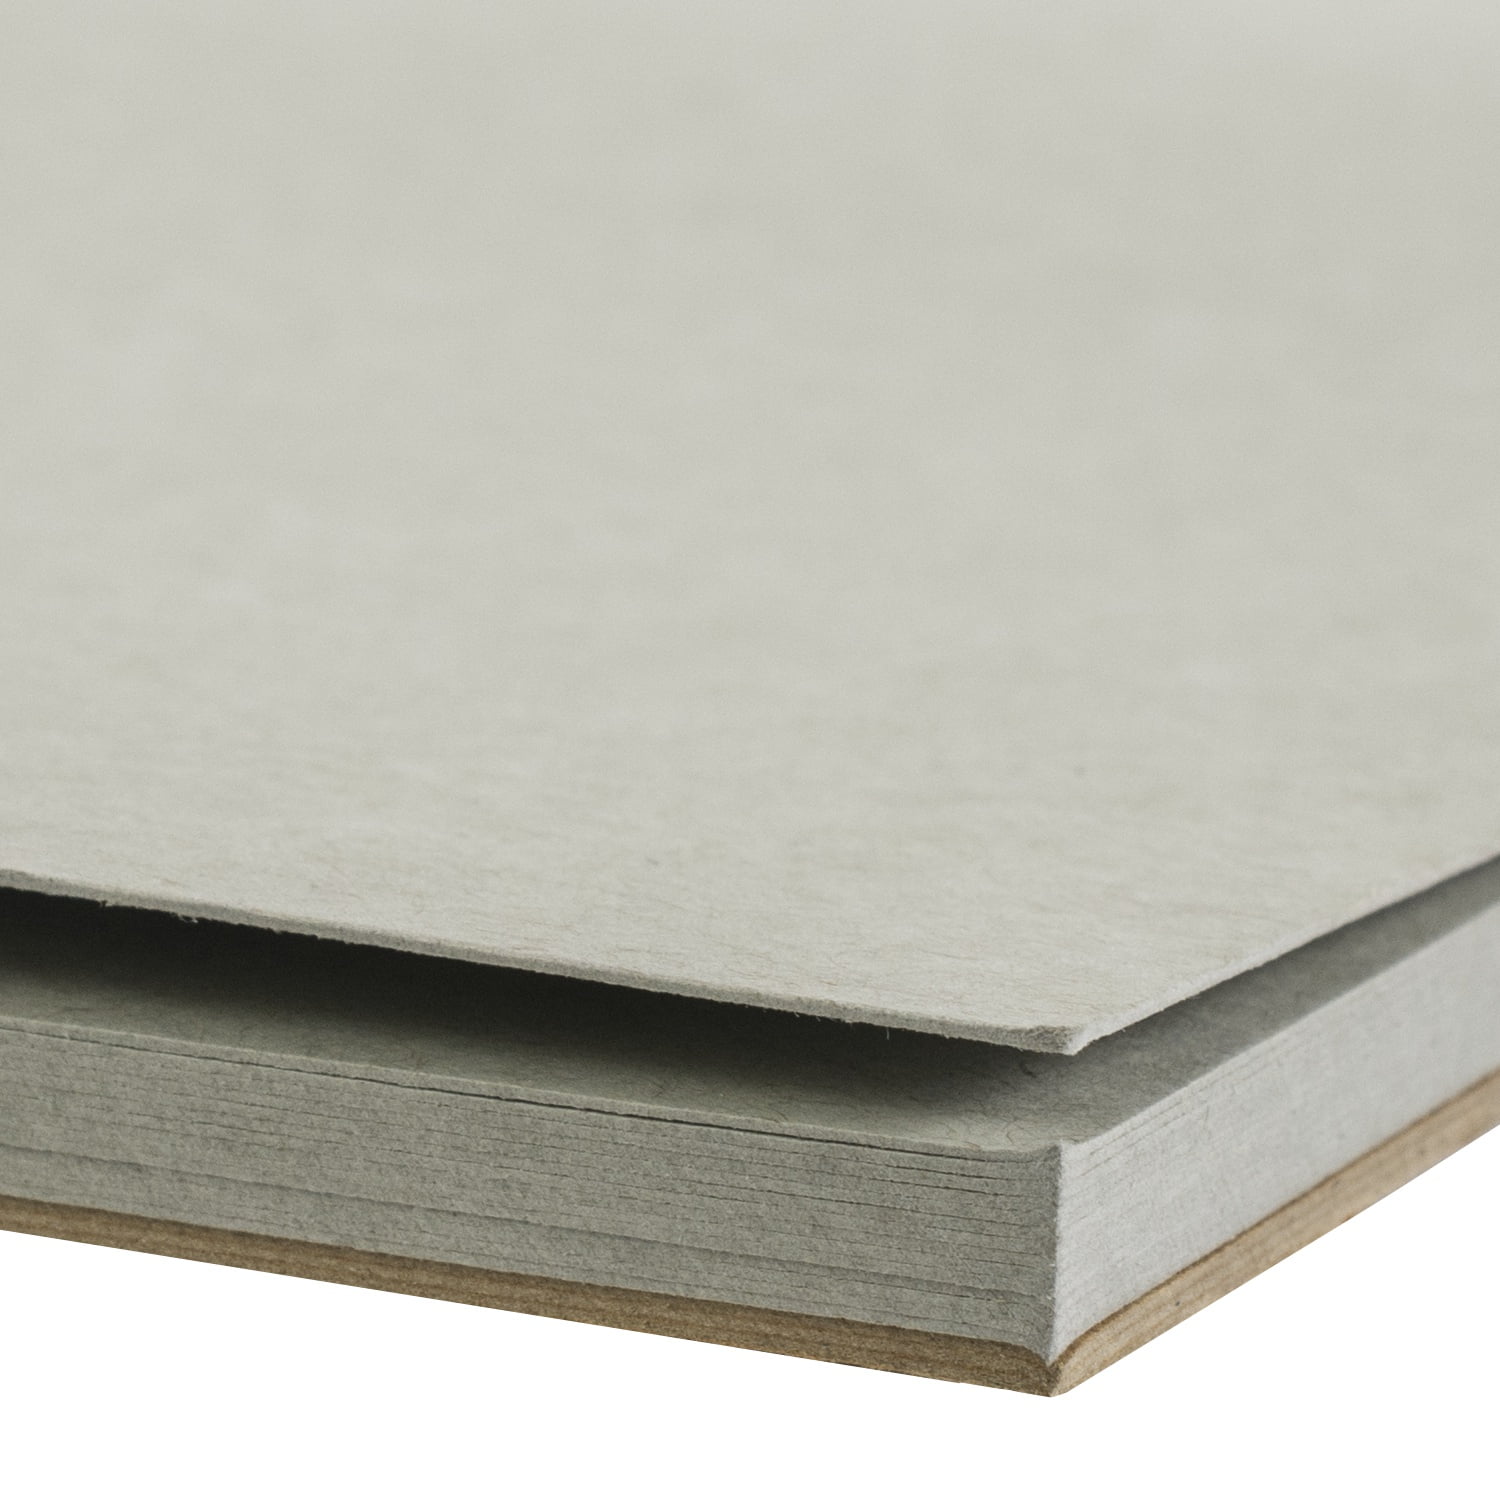 Strathmore Mixed Media 400 Series Glue-Bound Pad (185 lb. 15 sheets)  11x14